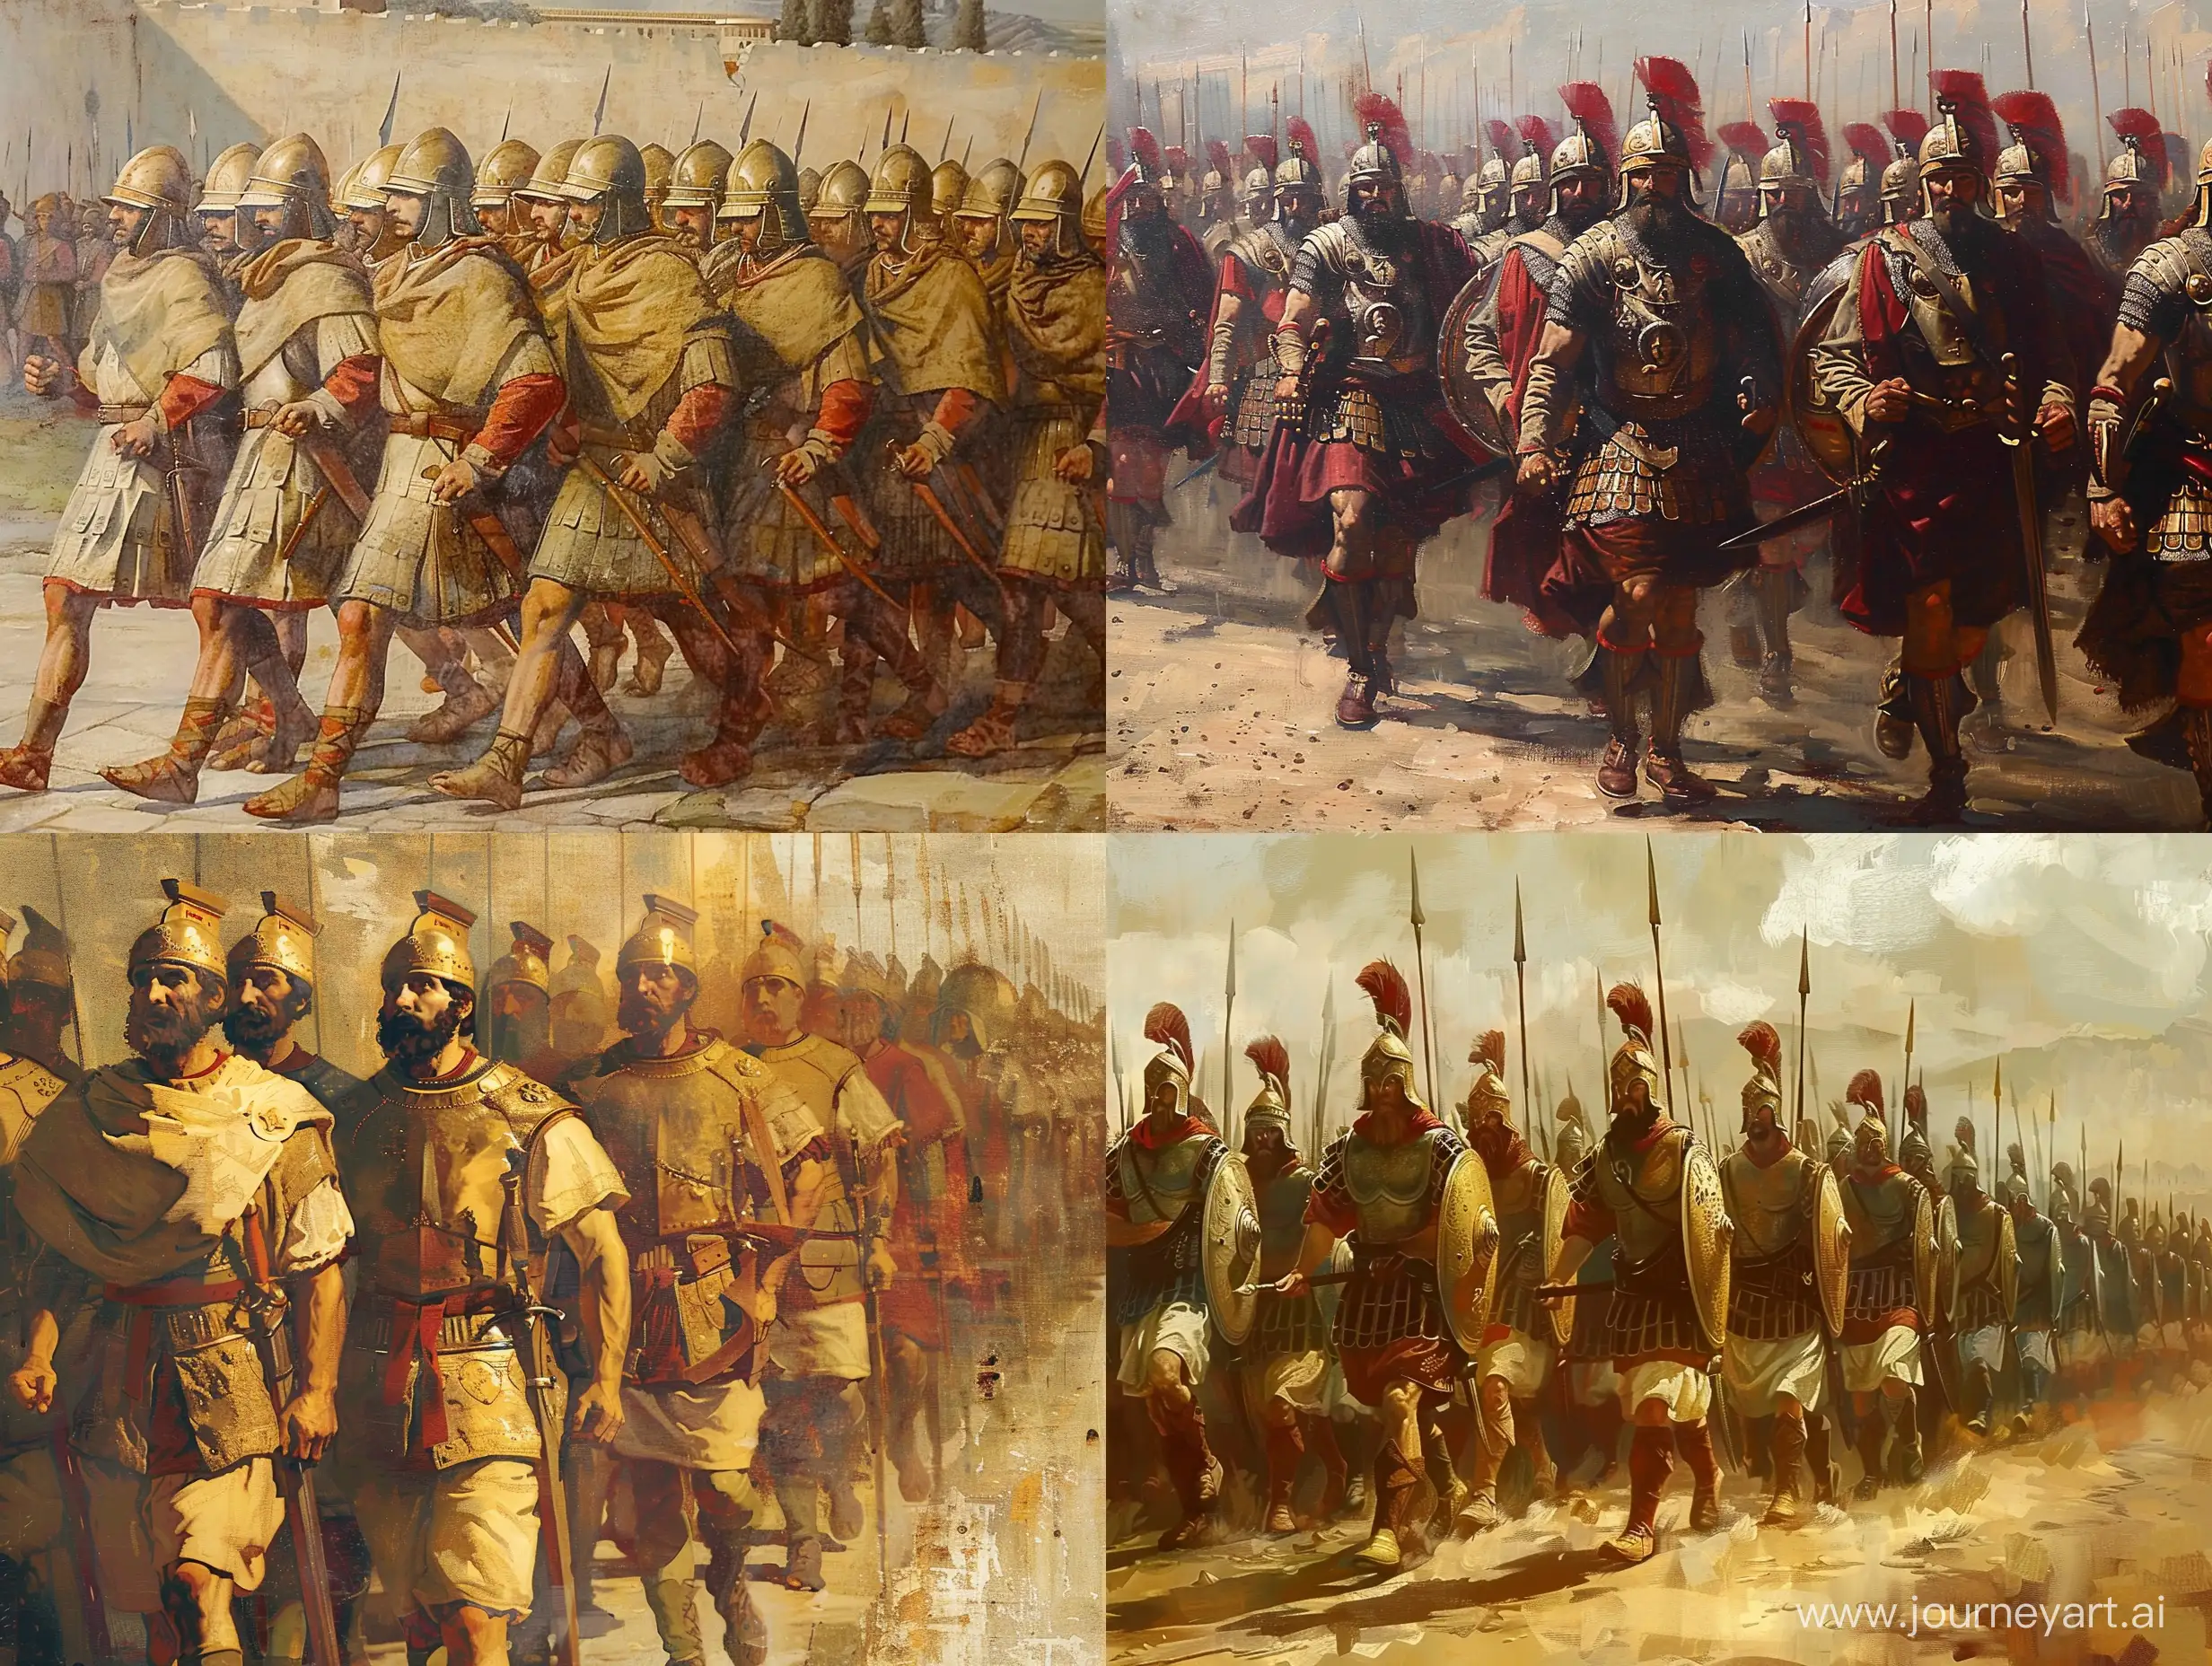 Byzantine soldiers marching to war. Renaissance style, 4k, painting, leonardo davinci style.